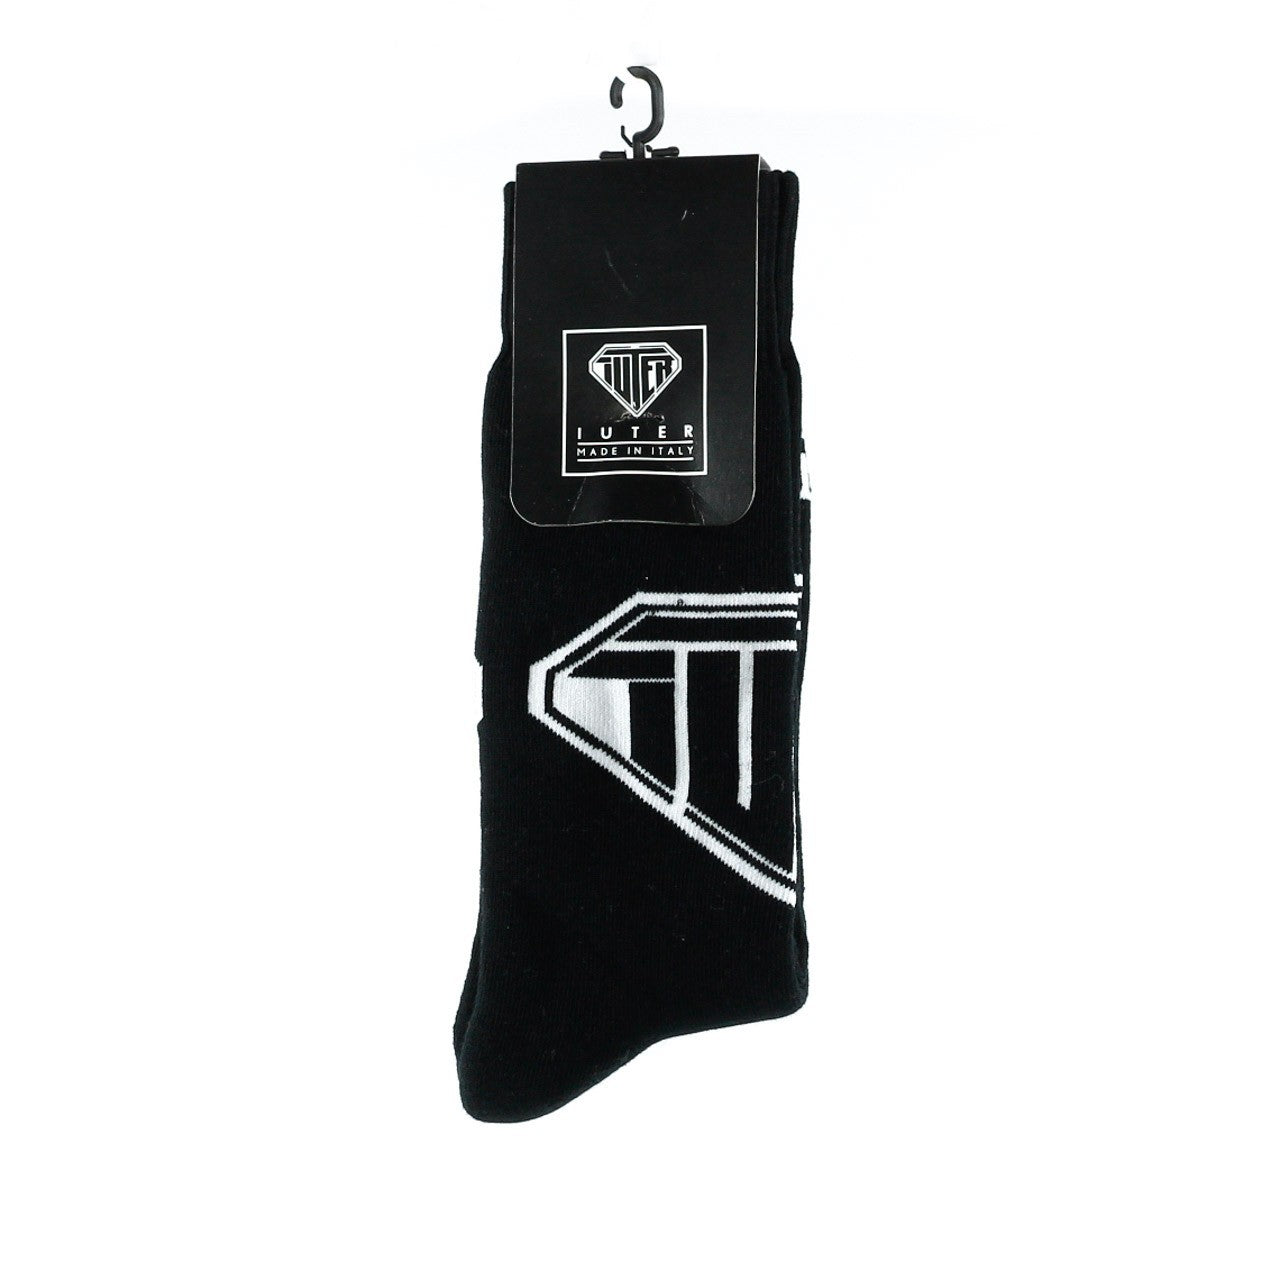 Iuter, Calza Media Uomo Logo Socks, Black